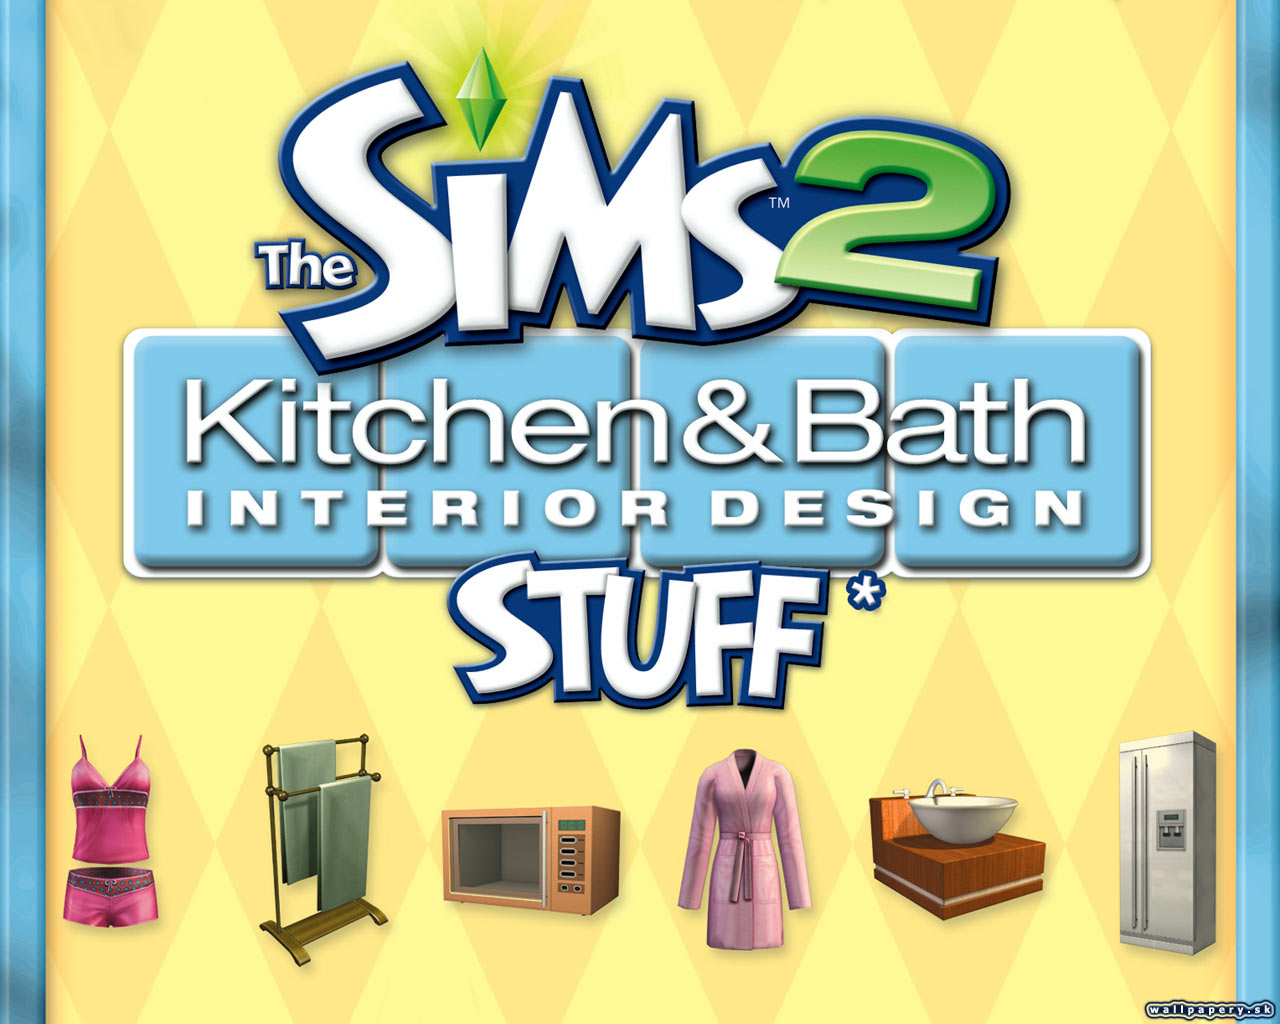 The Sims 2: Kitchen & Bath Interior Design Stuff - wallpaper 1